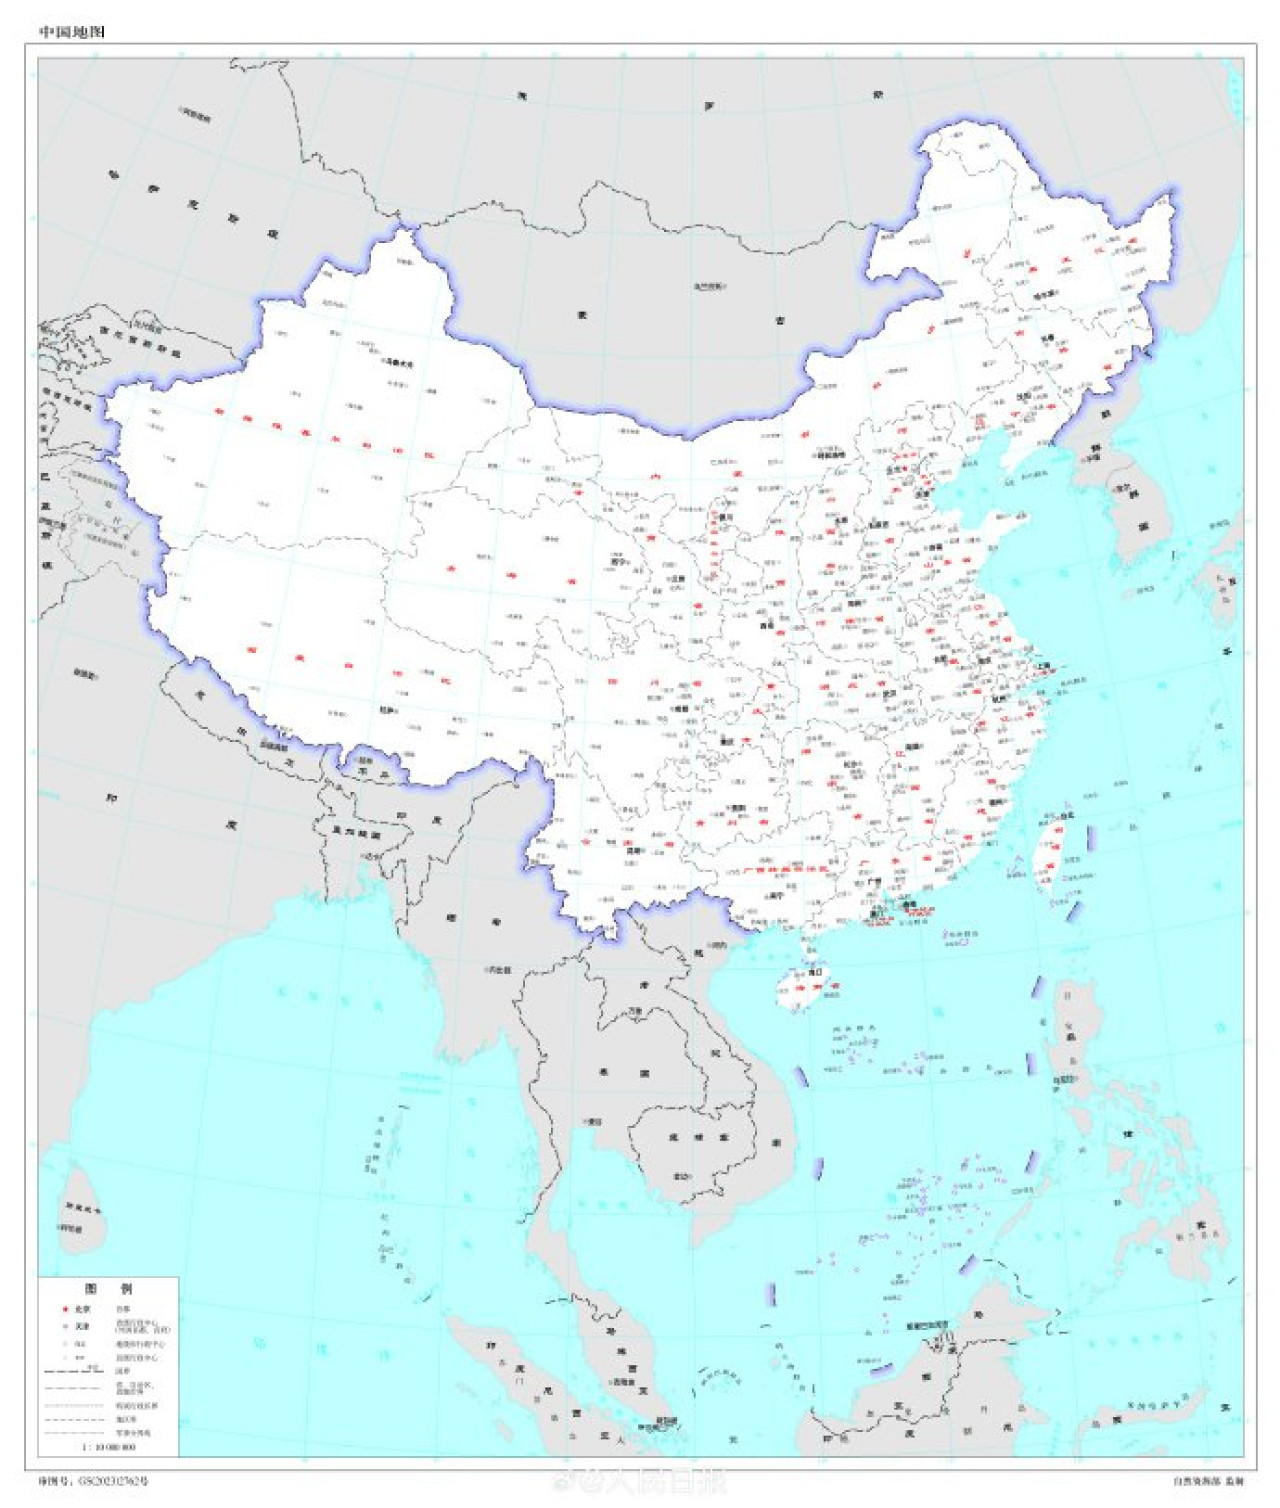 Mapa con zona en disputa entre India y China. Foto: Twitter.